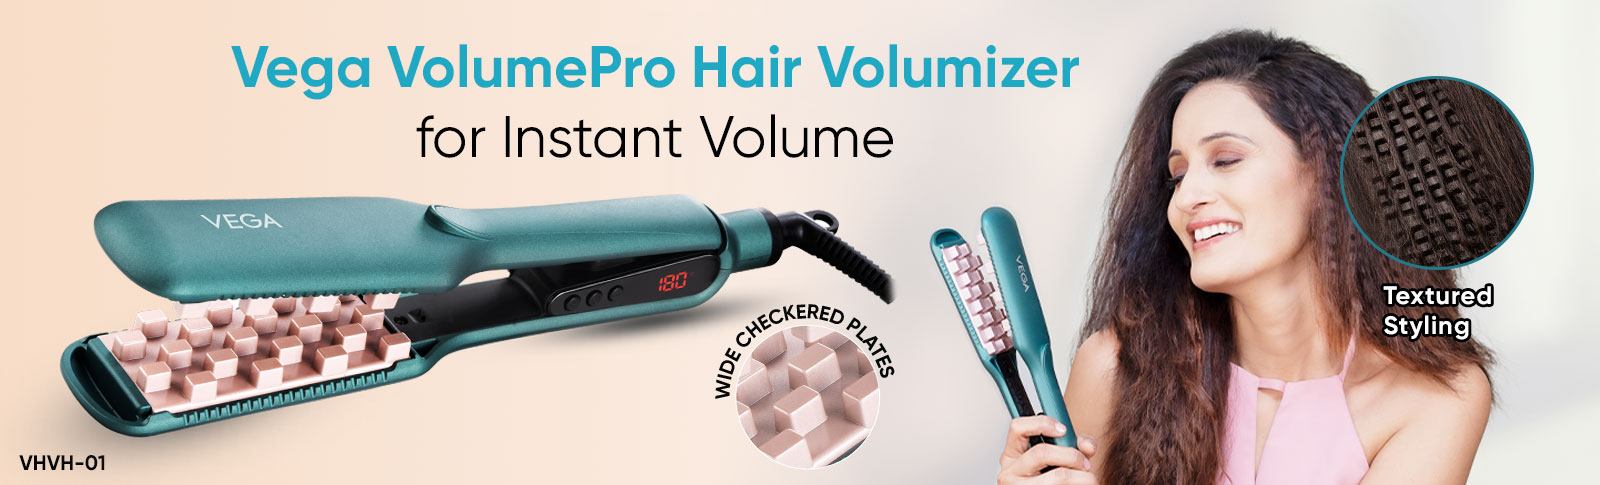 Vega VolumePro Hair Volumizer